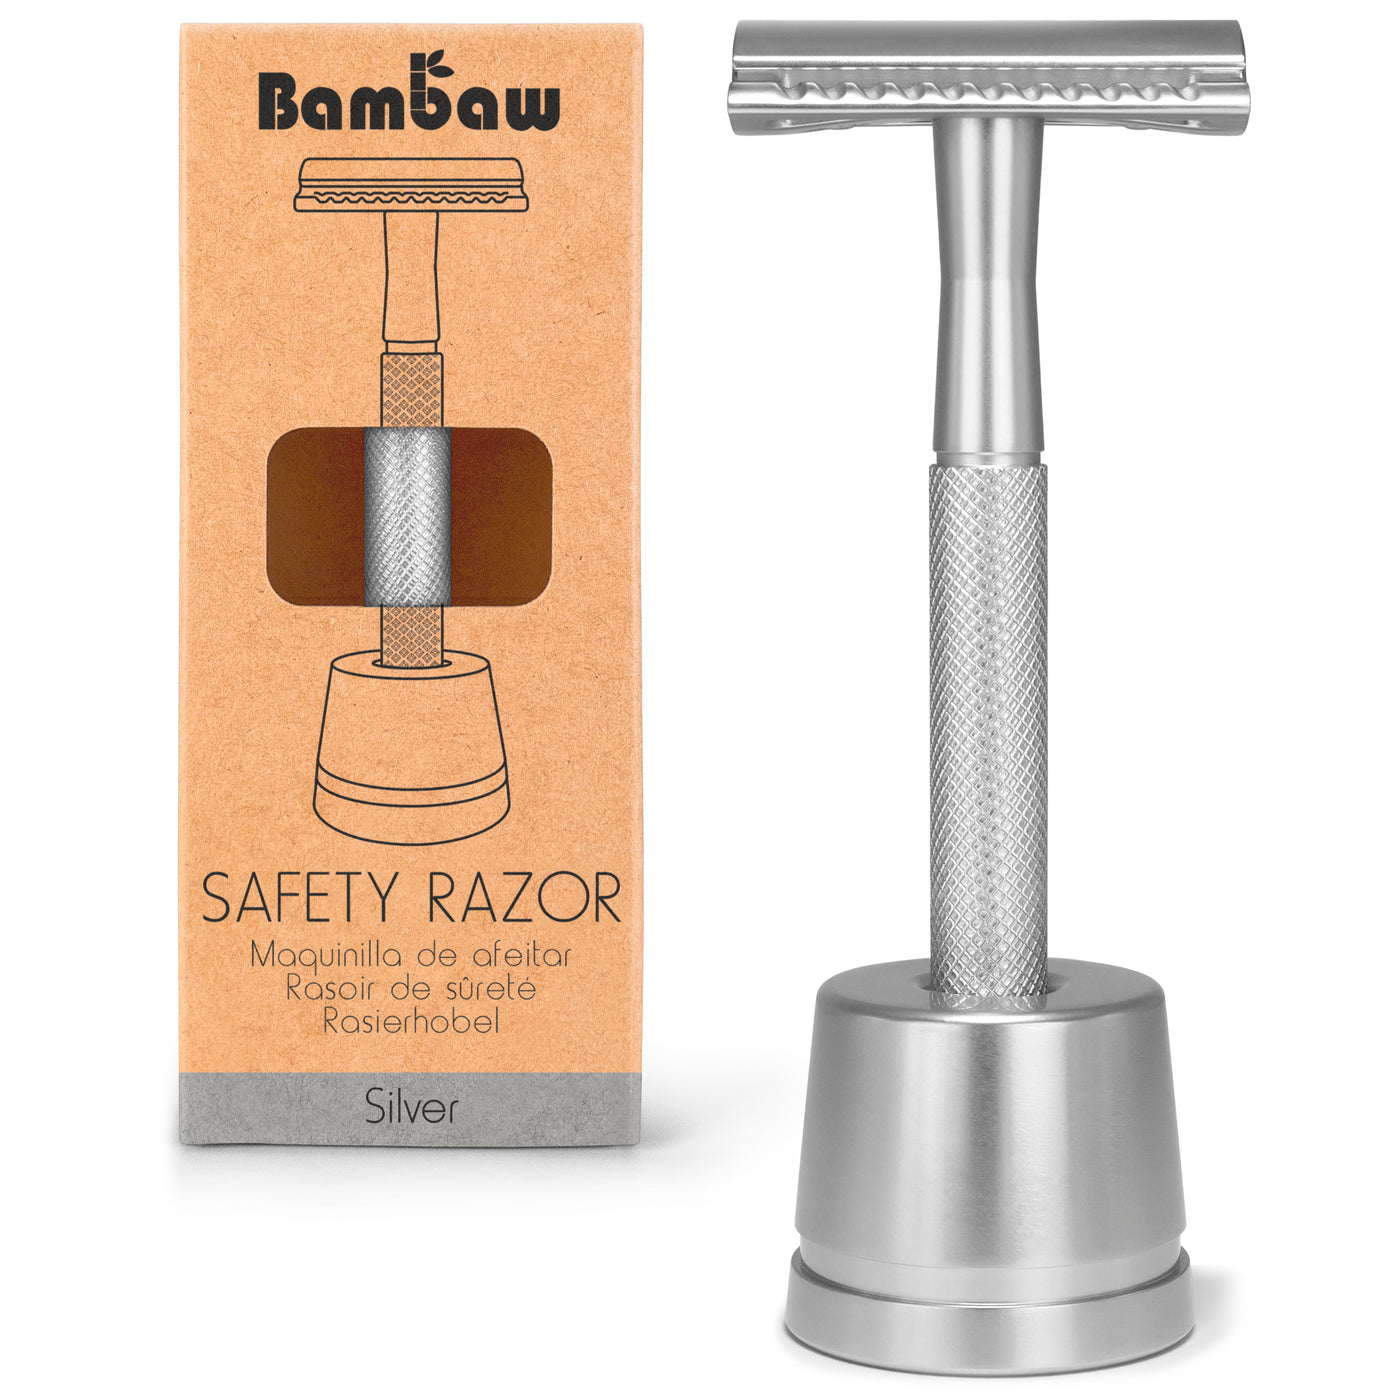 Bambaw Metal Safety Razor with Base - Silver